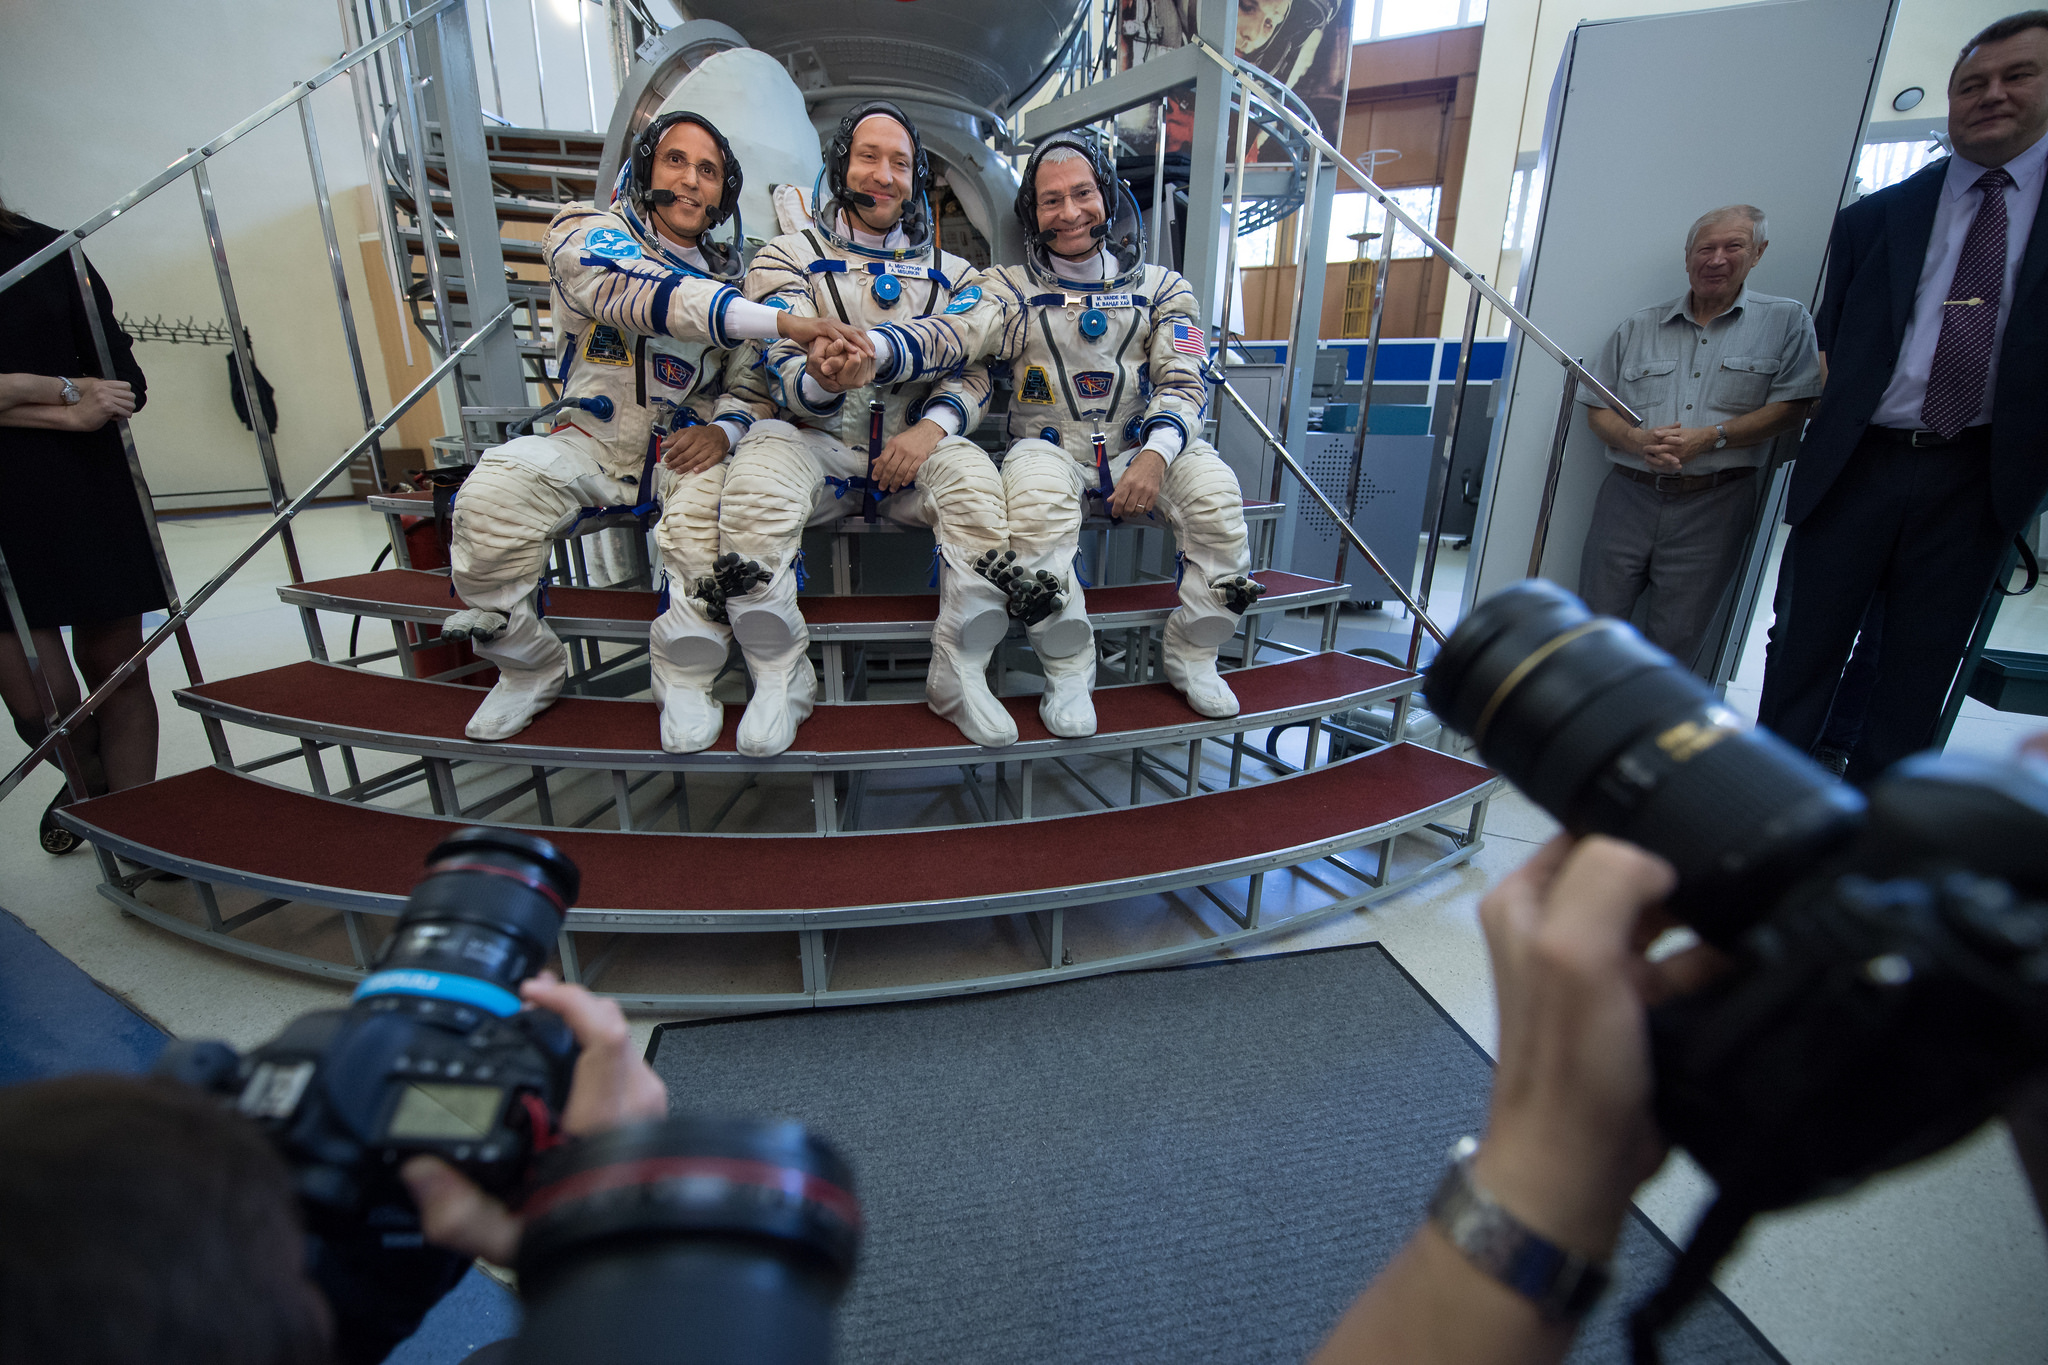 Expedition 53 crew members: Joe Acaba of NASA, Alexander Misurkin of Roscosmos, and Mark Vande Hei of NASA